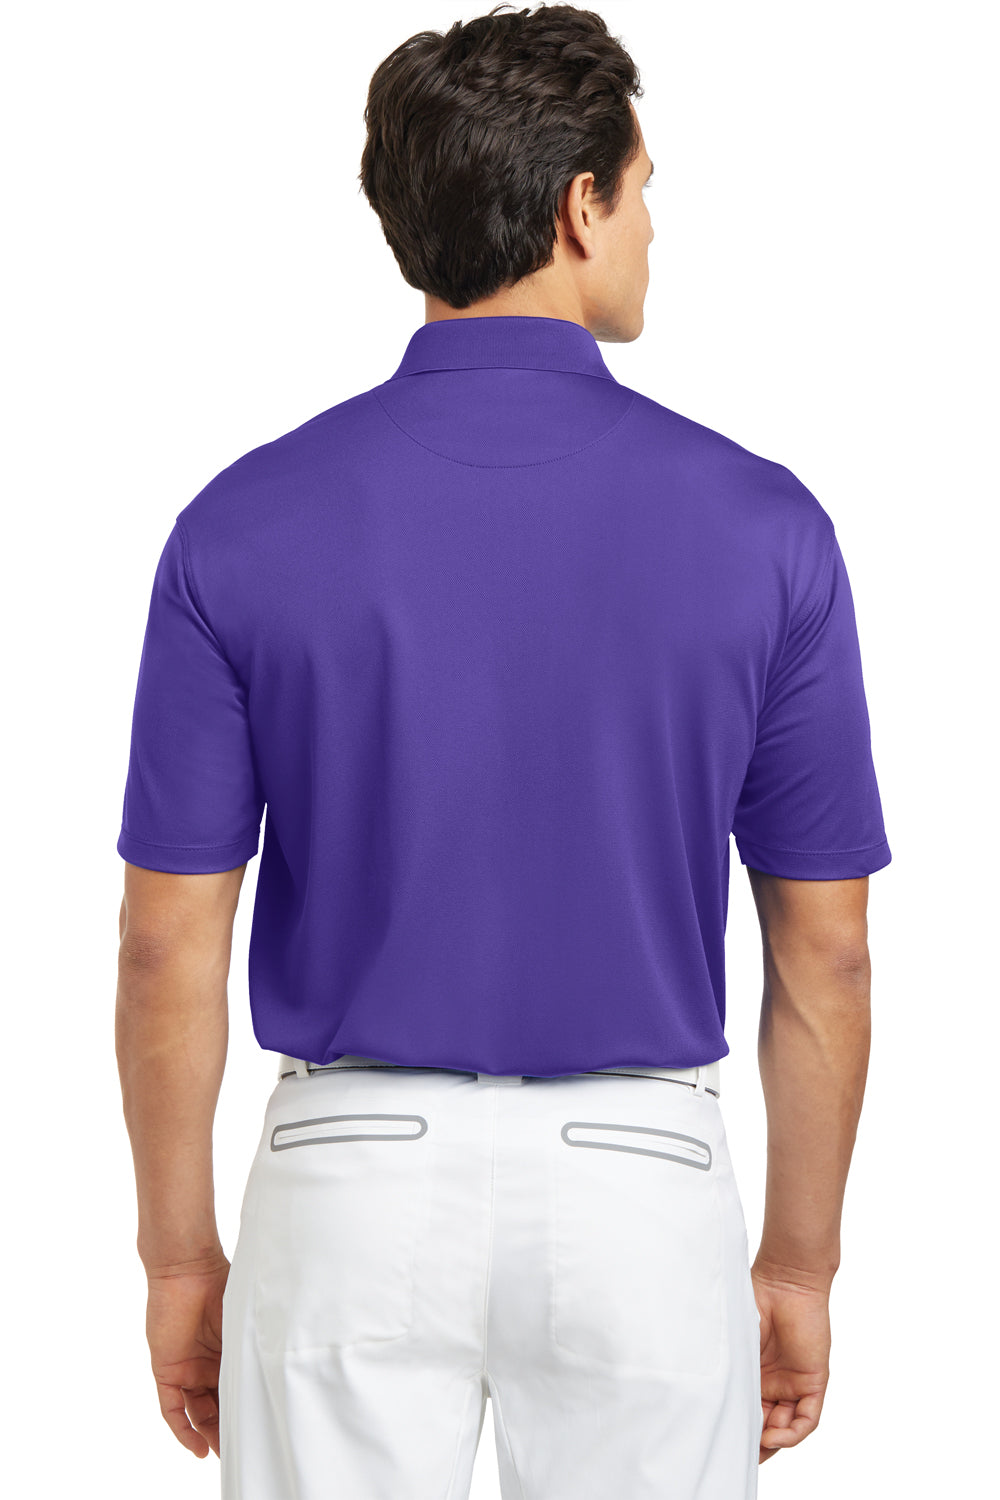 Nike 203690 Mens Tech Basic Dri-Fit Moisture Wicking Short Sleeve Polo Shirt Varsity Purple Model Back